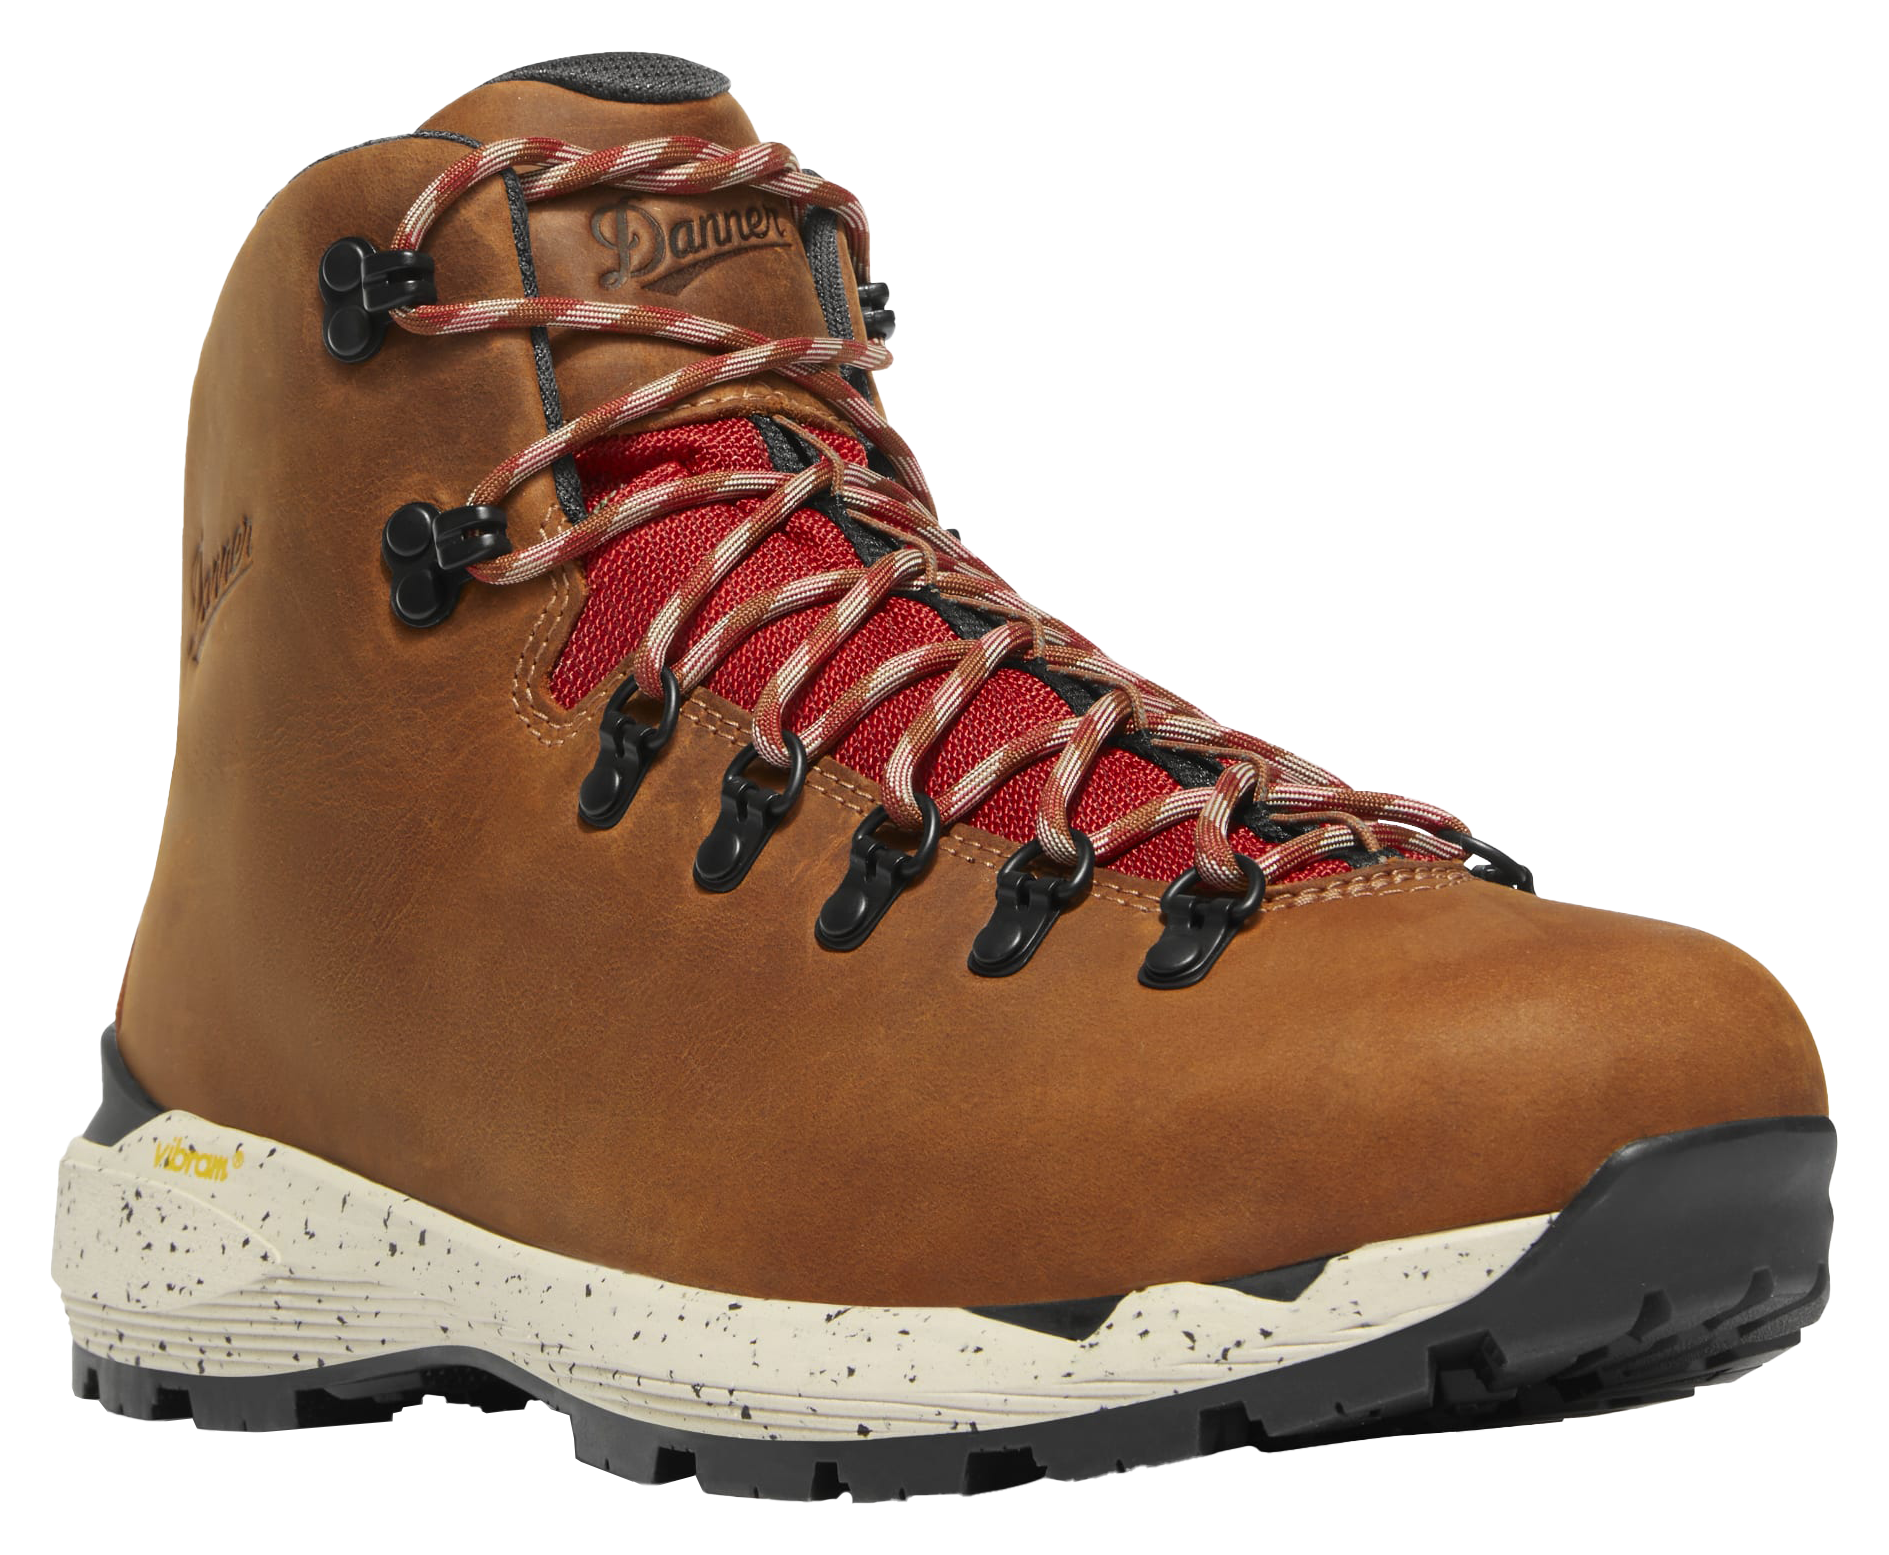 Danner Mountain 600 Evo GORE-TEX Hiking Boots for Men | Bass Pro Shops - Mocha Brown/Rhodo Red - 12M